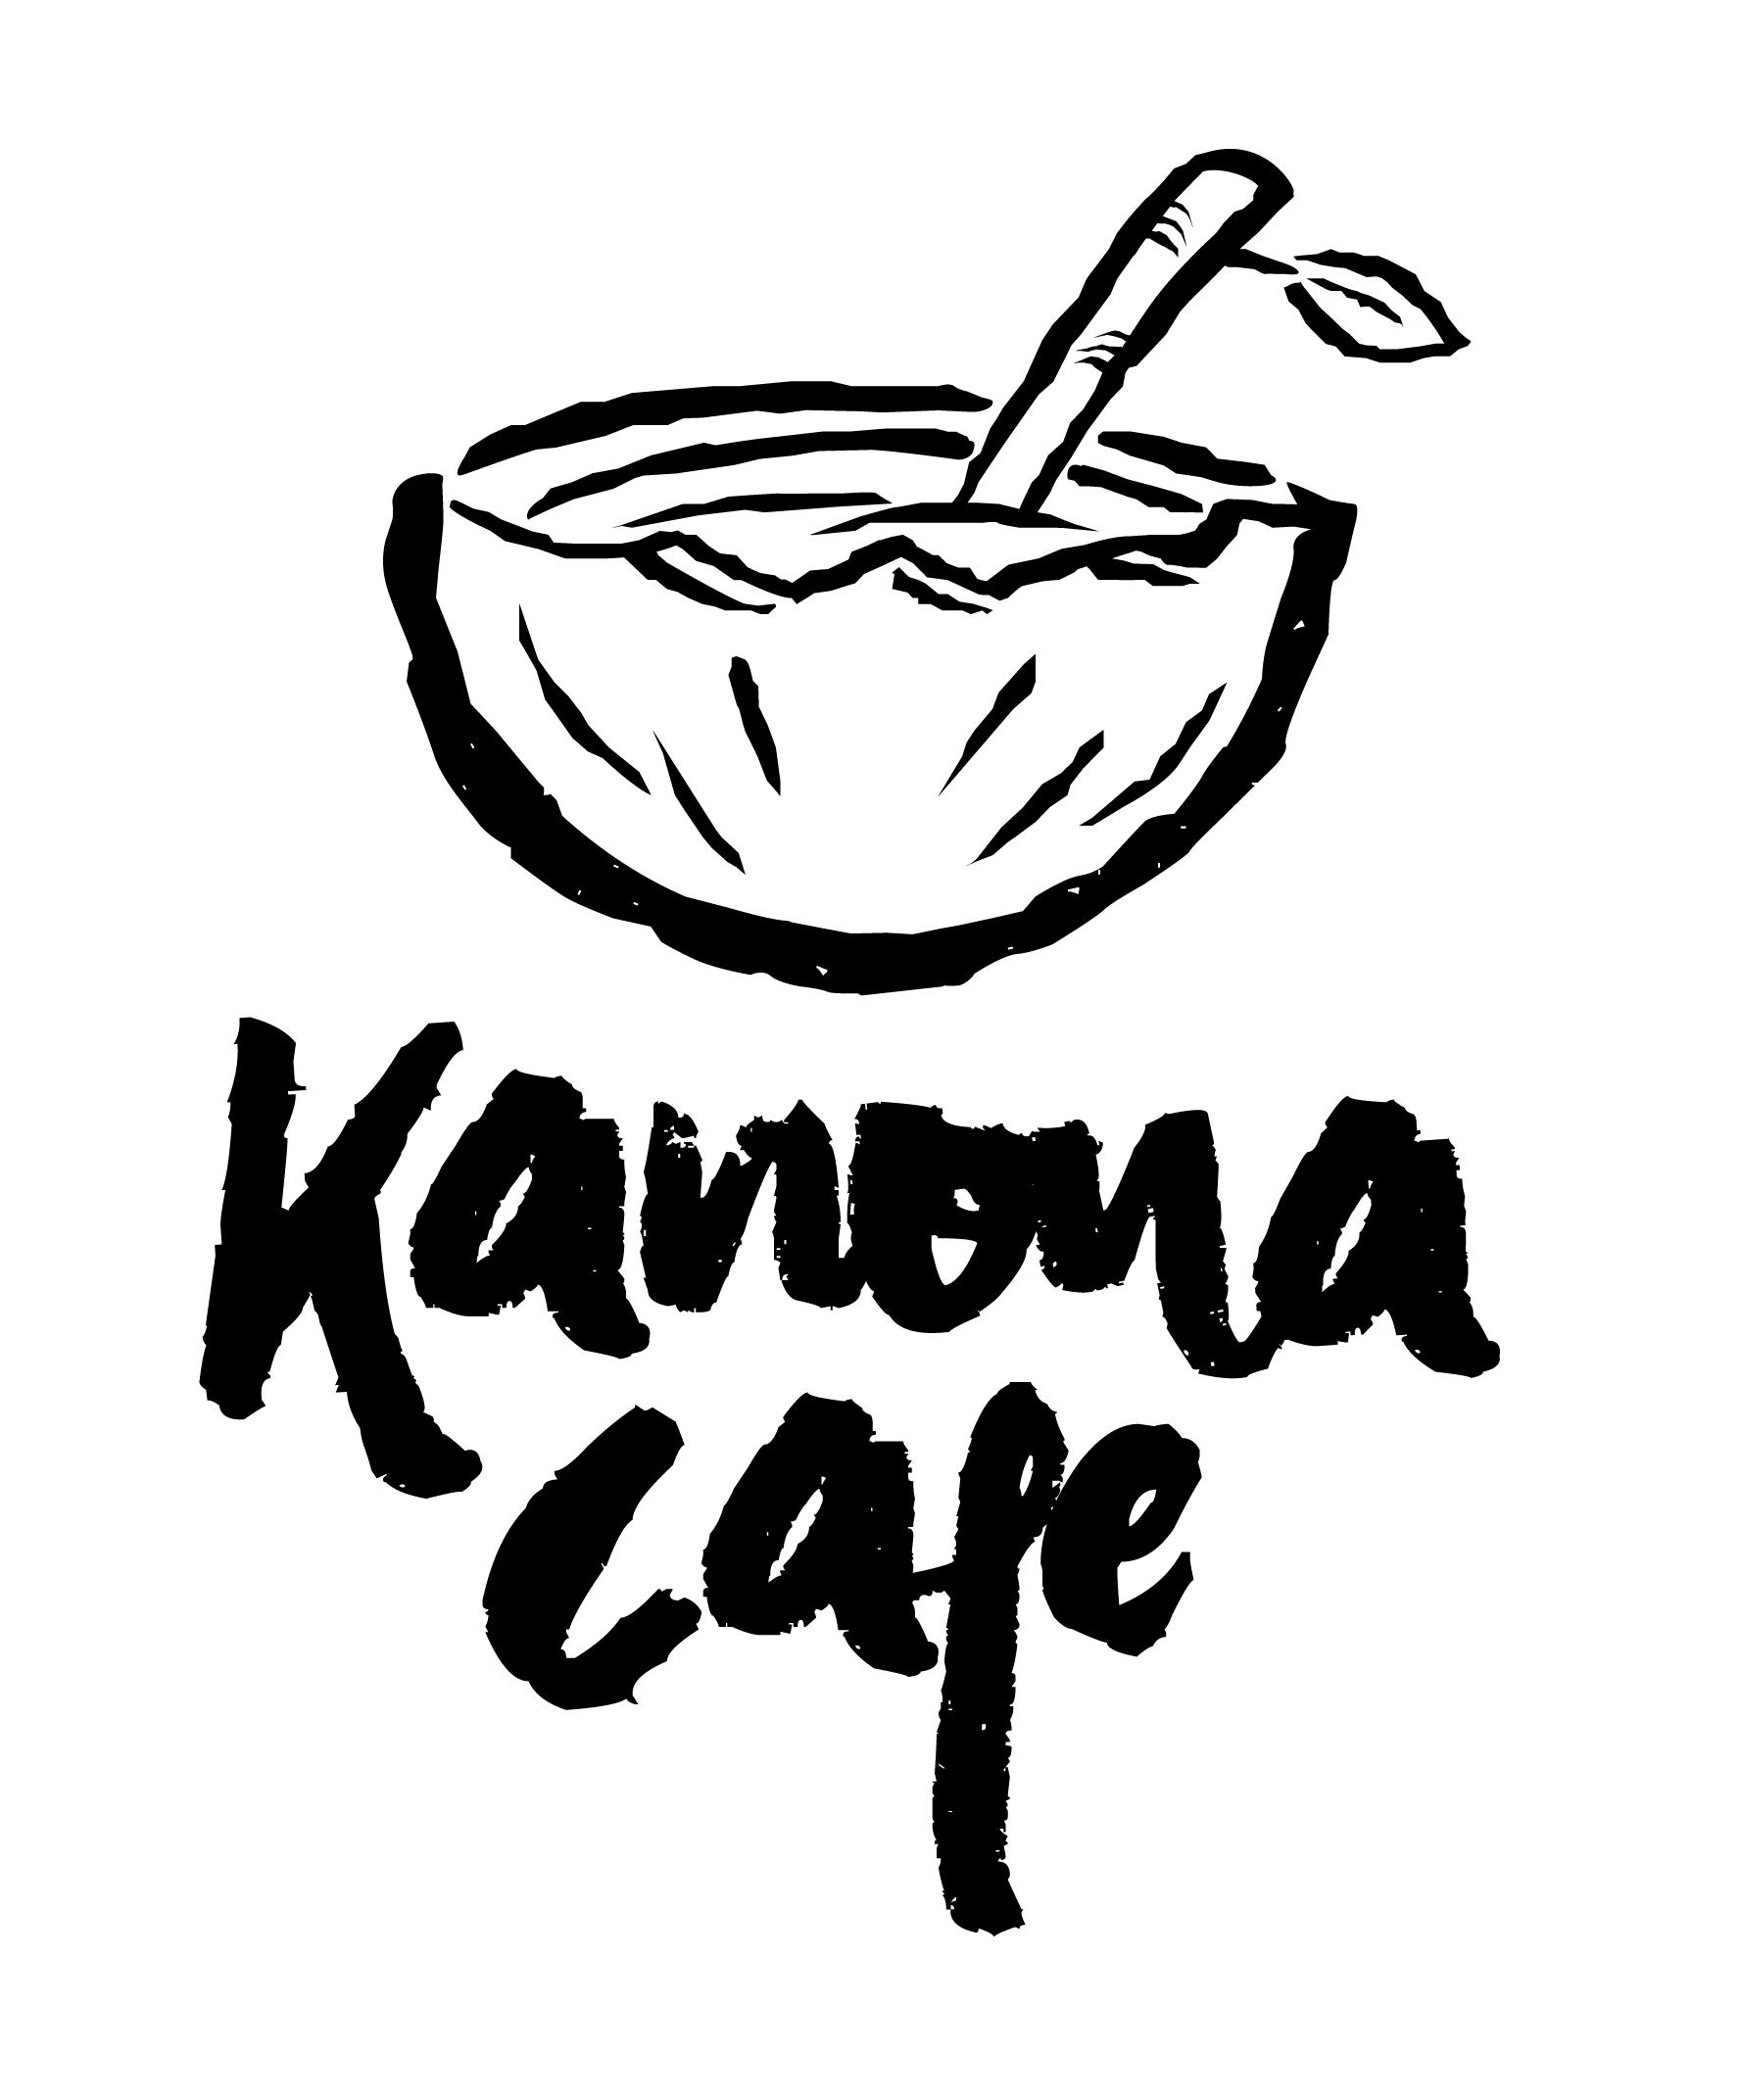 Kanona Cafe